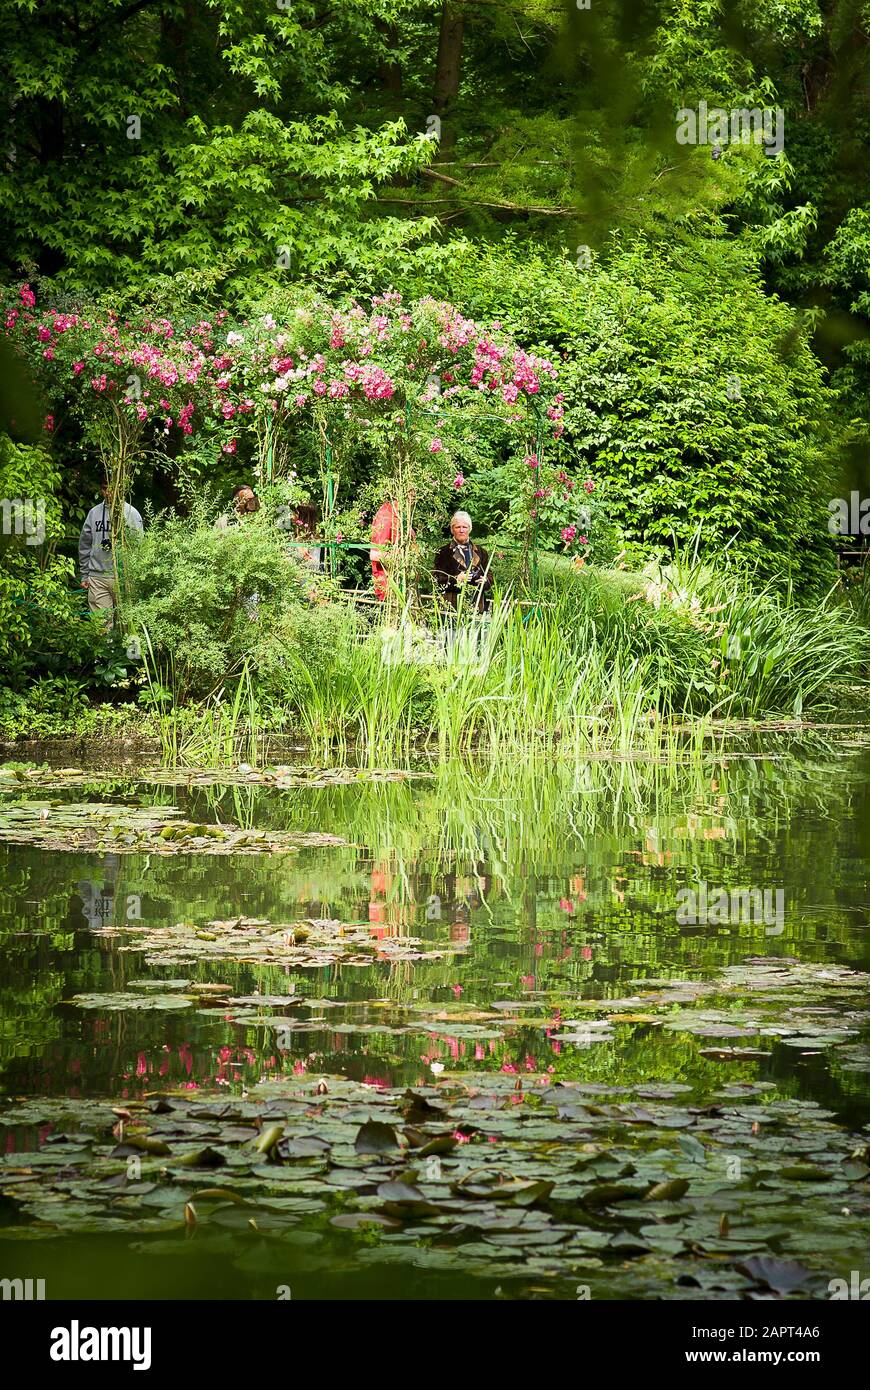 Monet's garden - across the waterlily pool - a peaceful scene Stock Photo